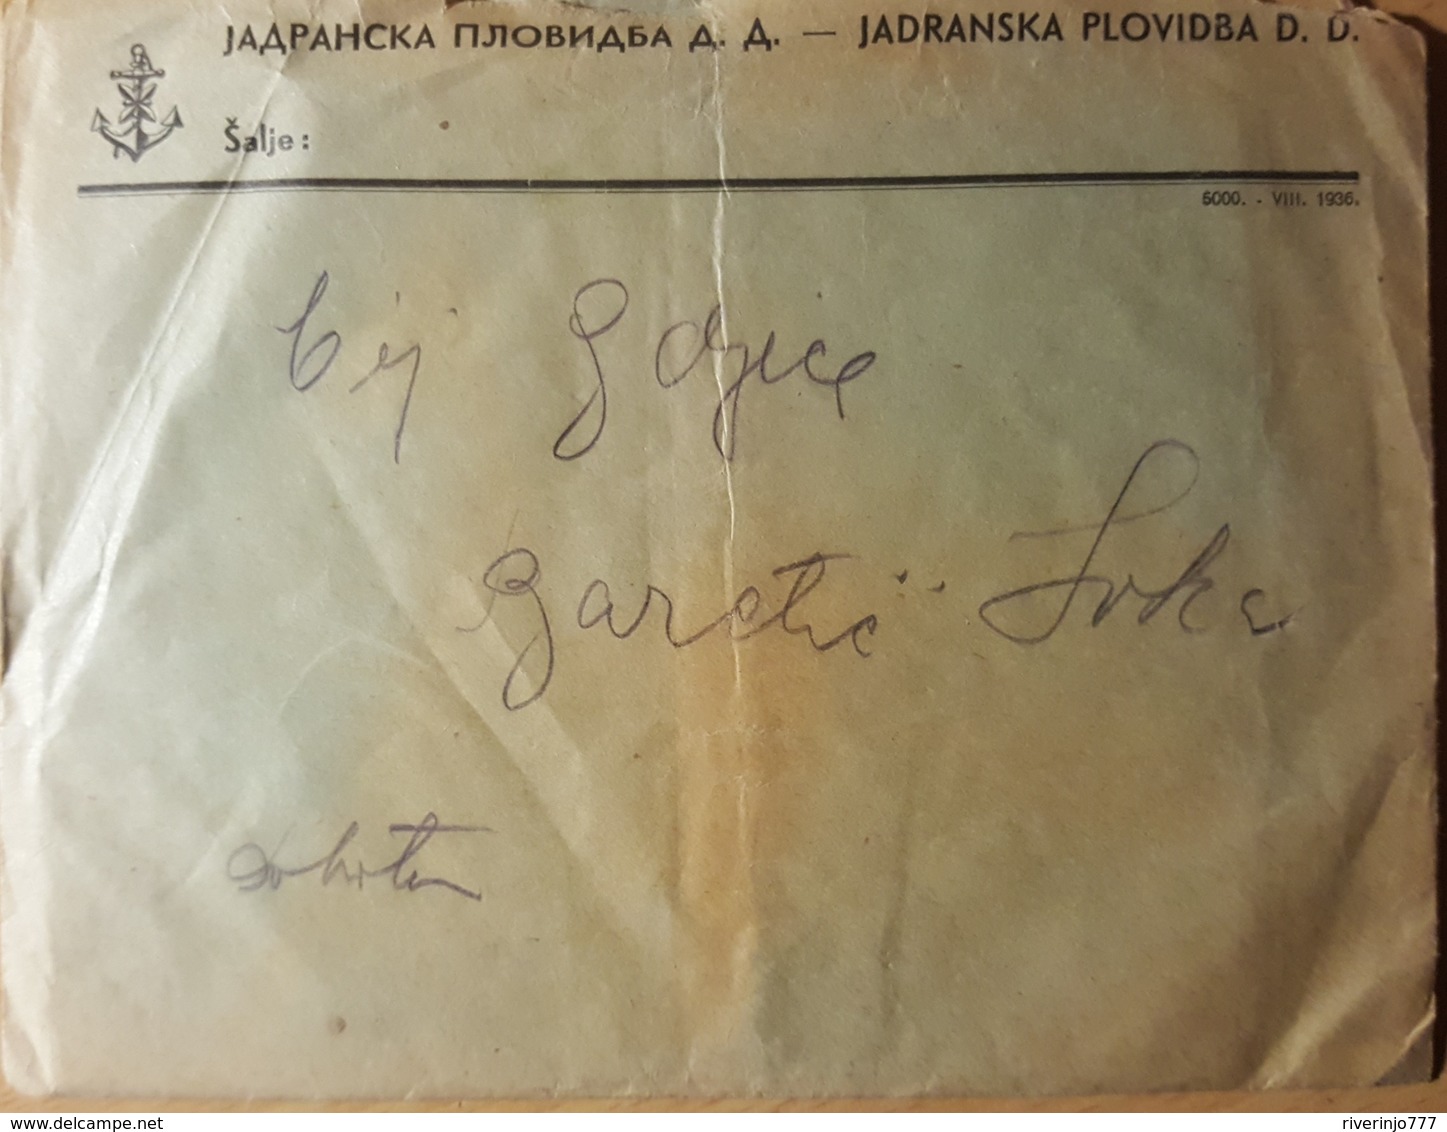 Jadranska Plovidba D.d. Susak Fiume 1936.  Envelove & Bill Croatia - Dépliants Turistici